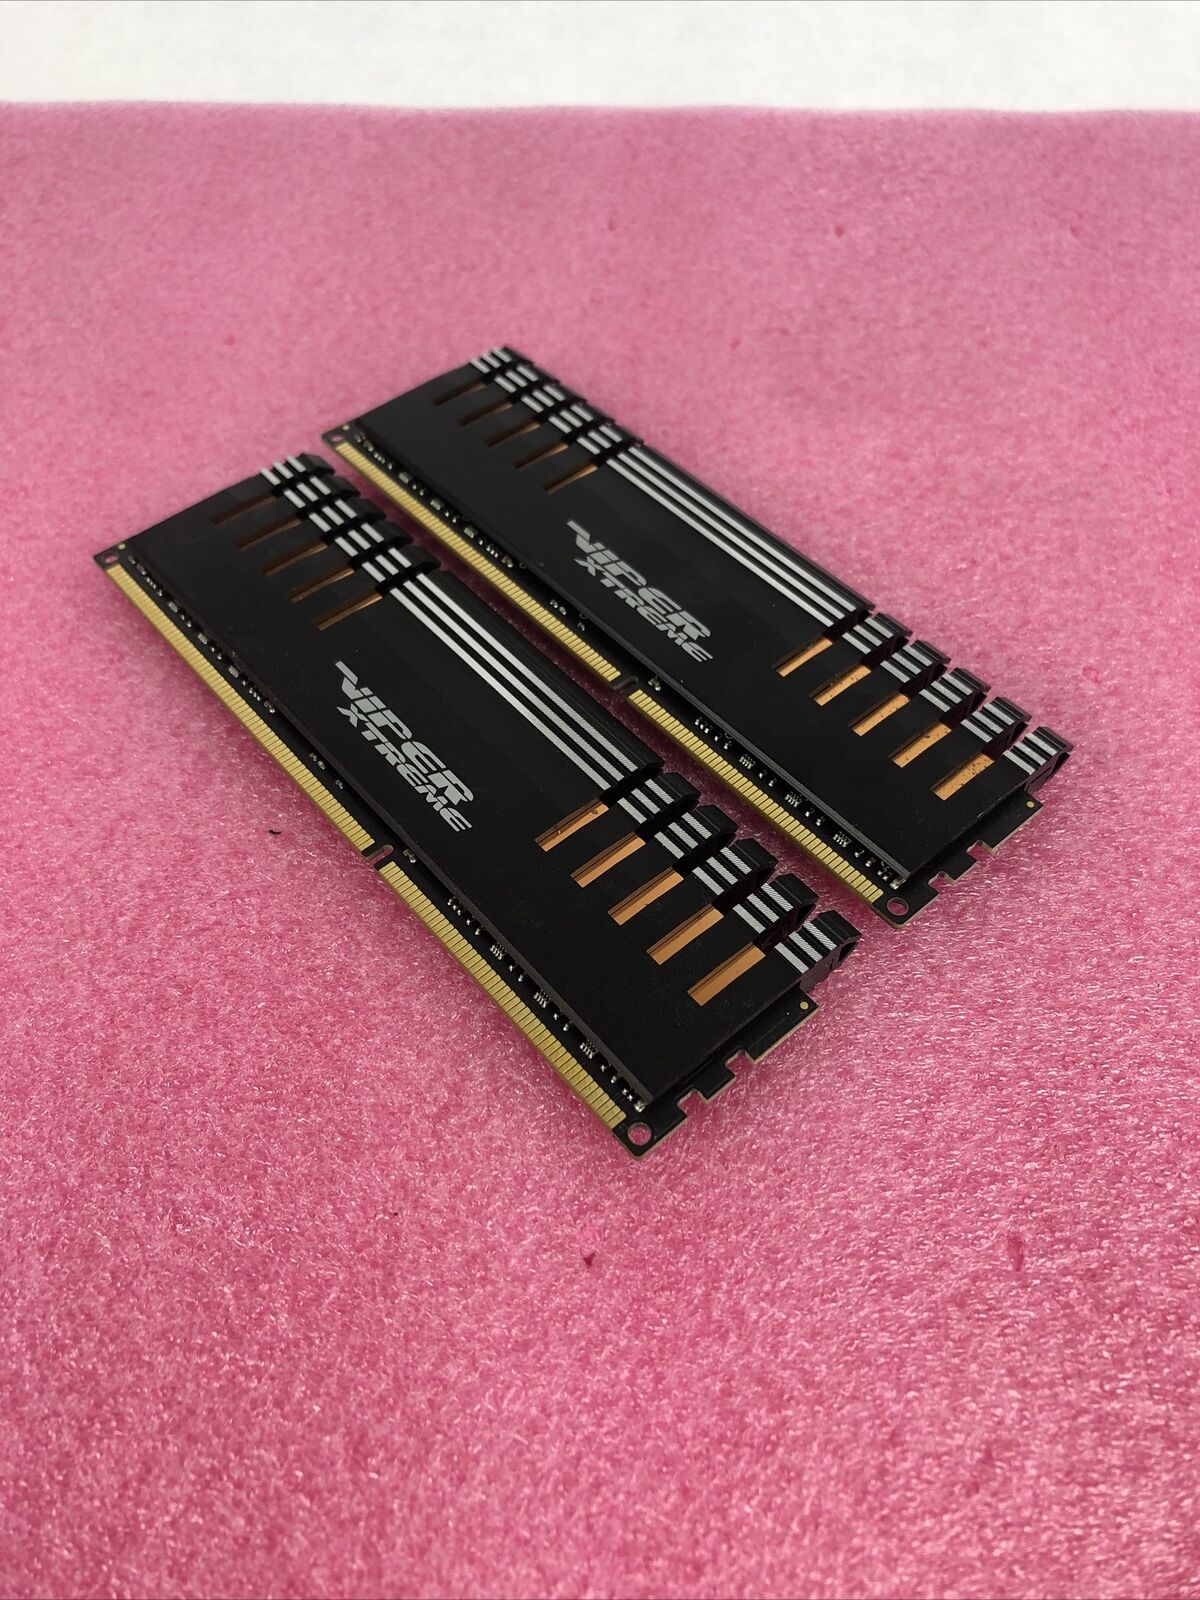 Viper Extreme PXD38G1600LLK kit of 2 8GB RAM